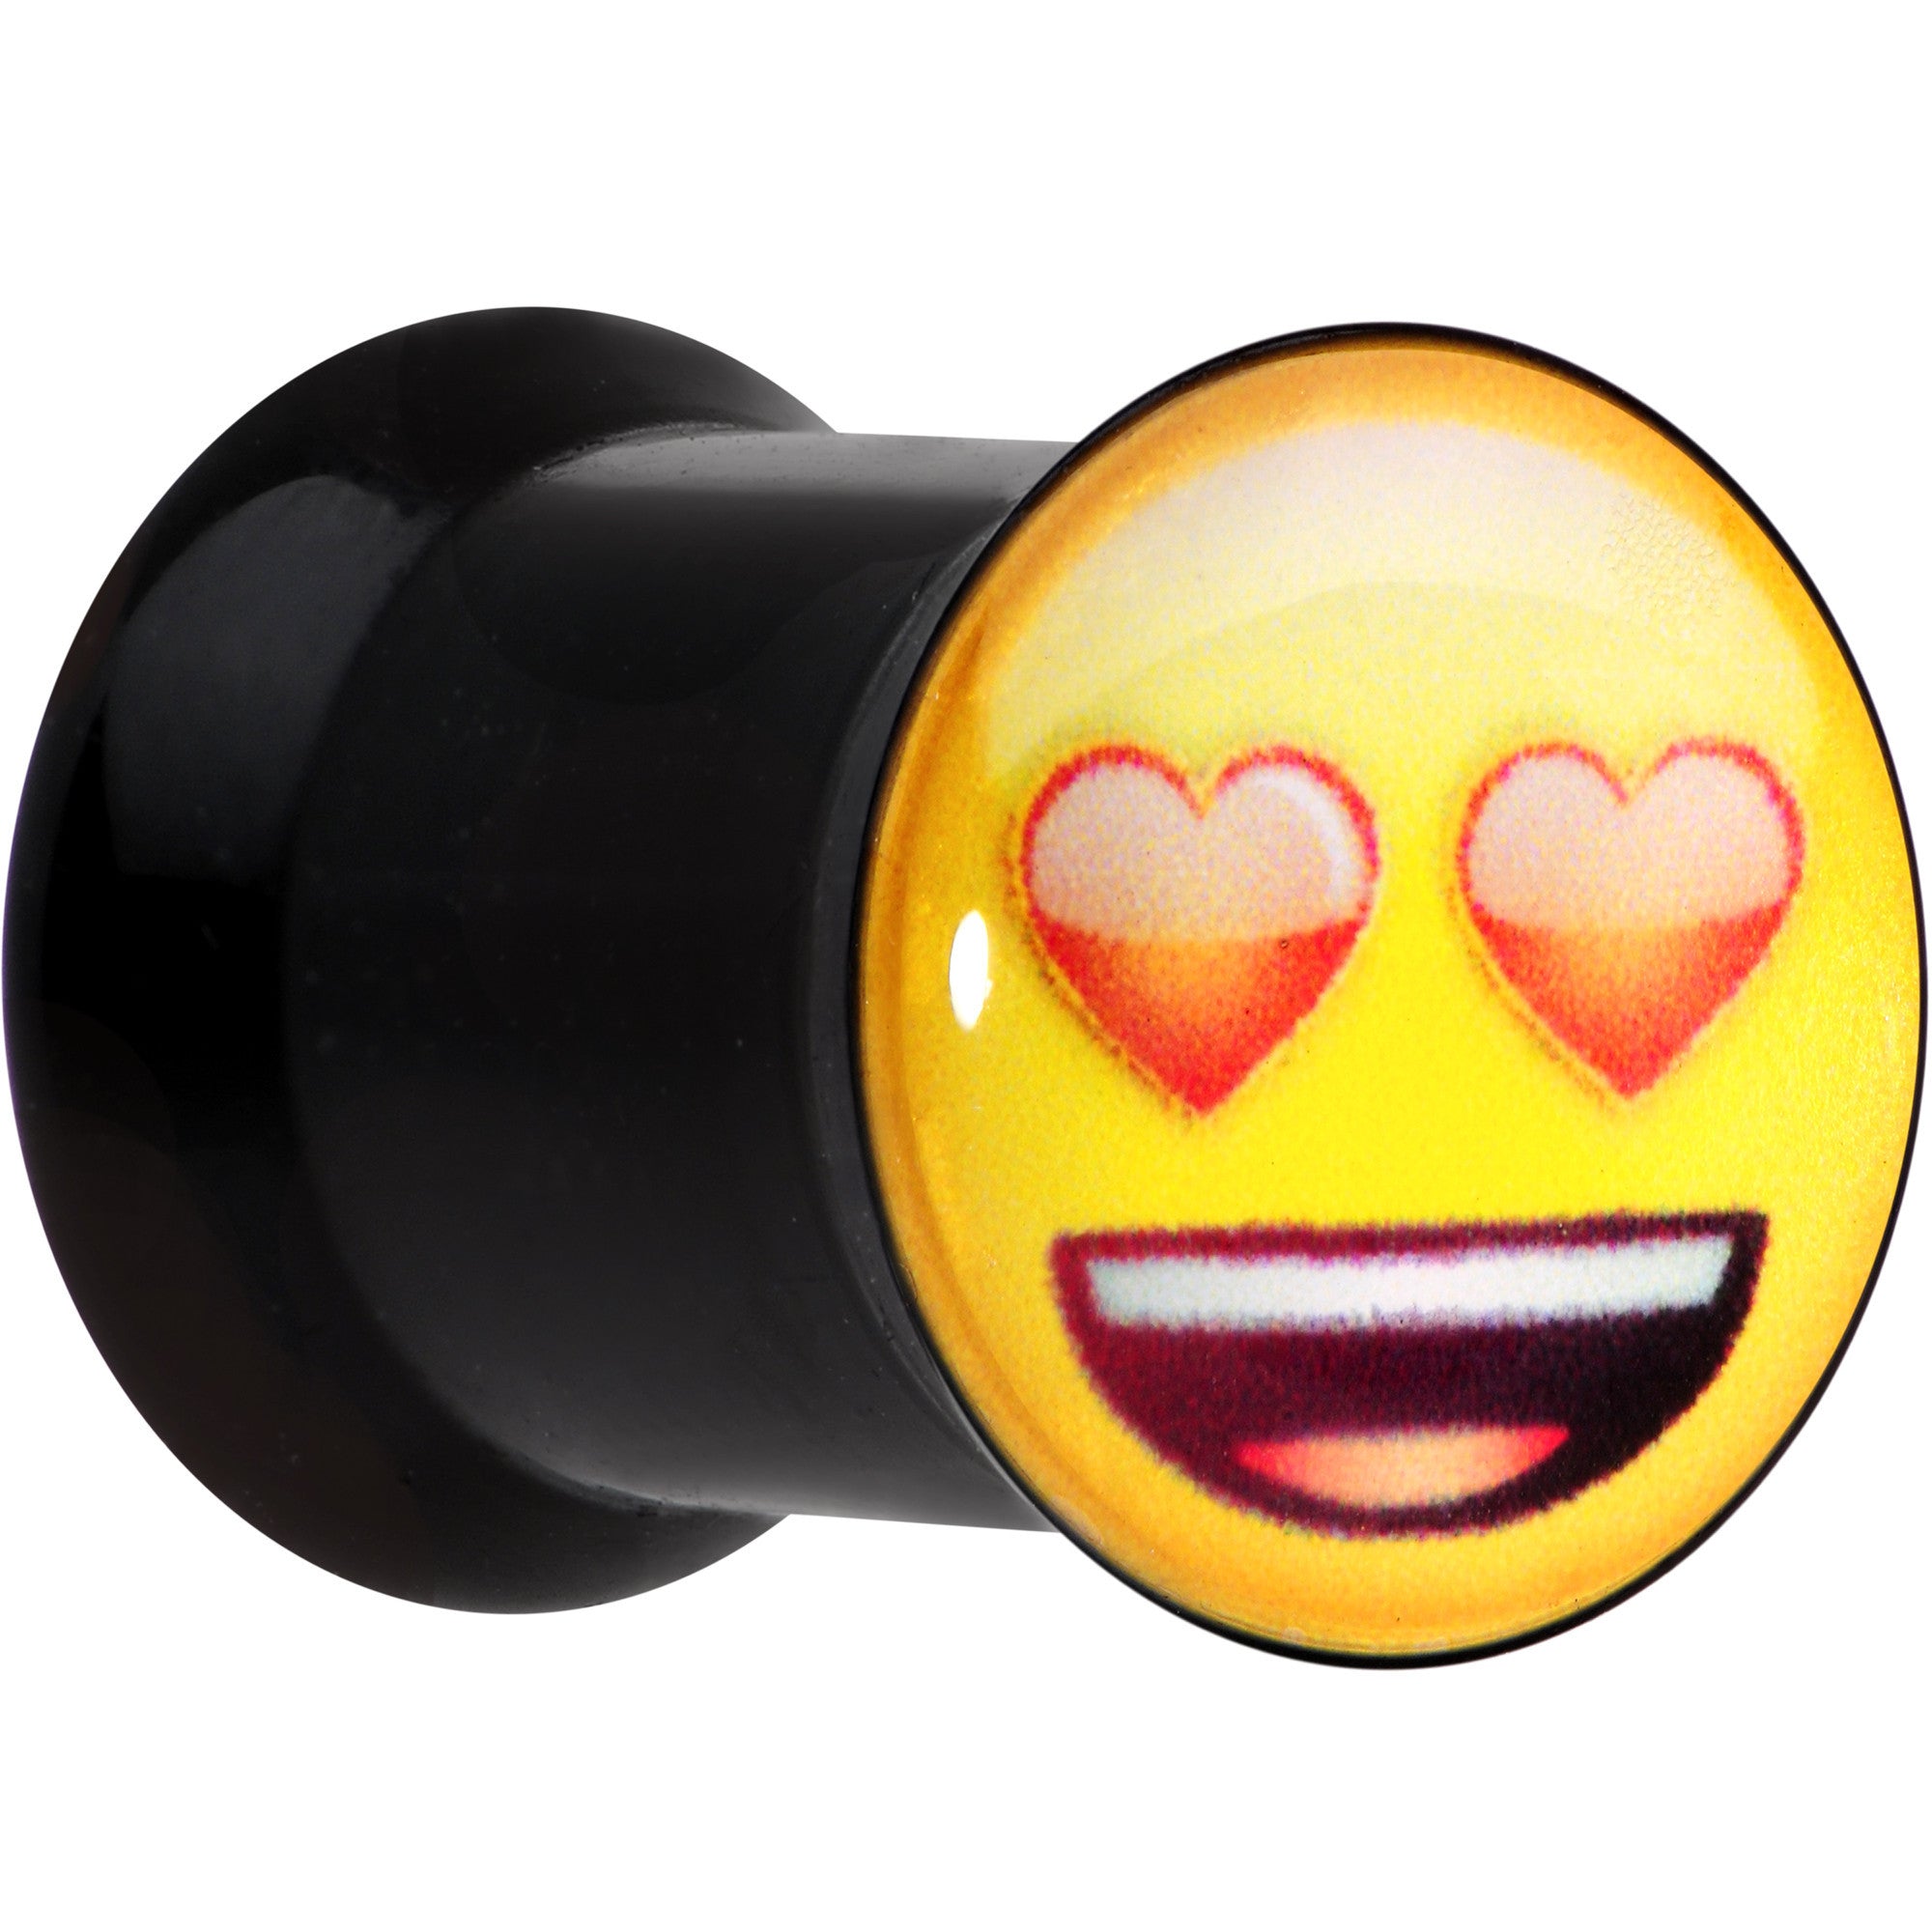 0 Gauge Licensed Heart Eyes emoji Acrylic Double Flare Plug Set